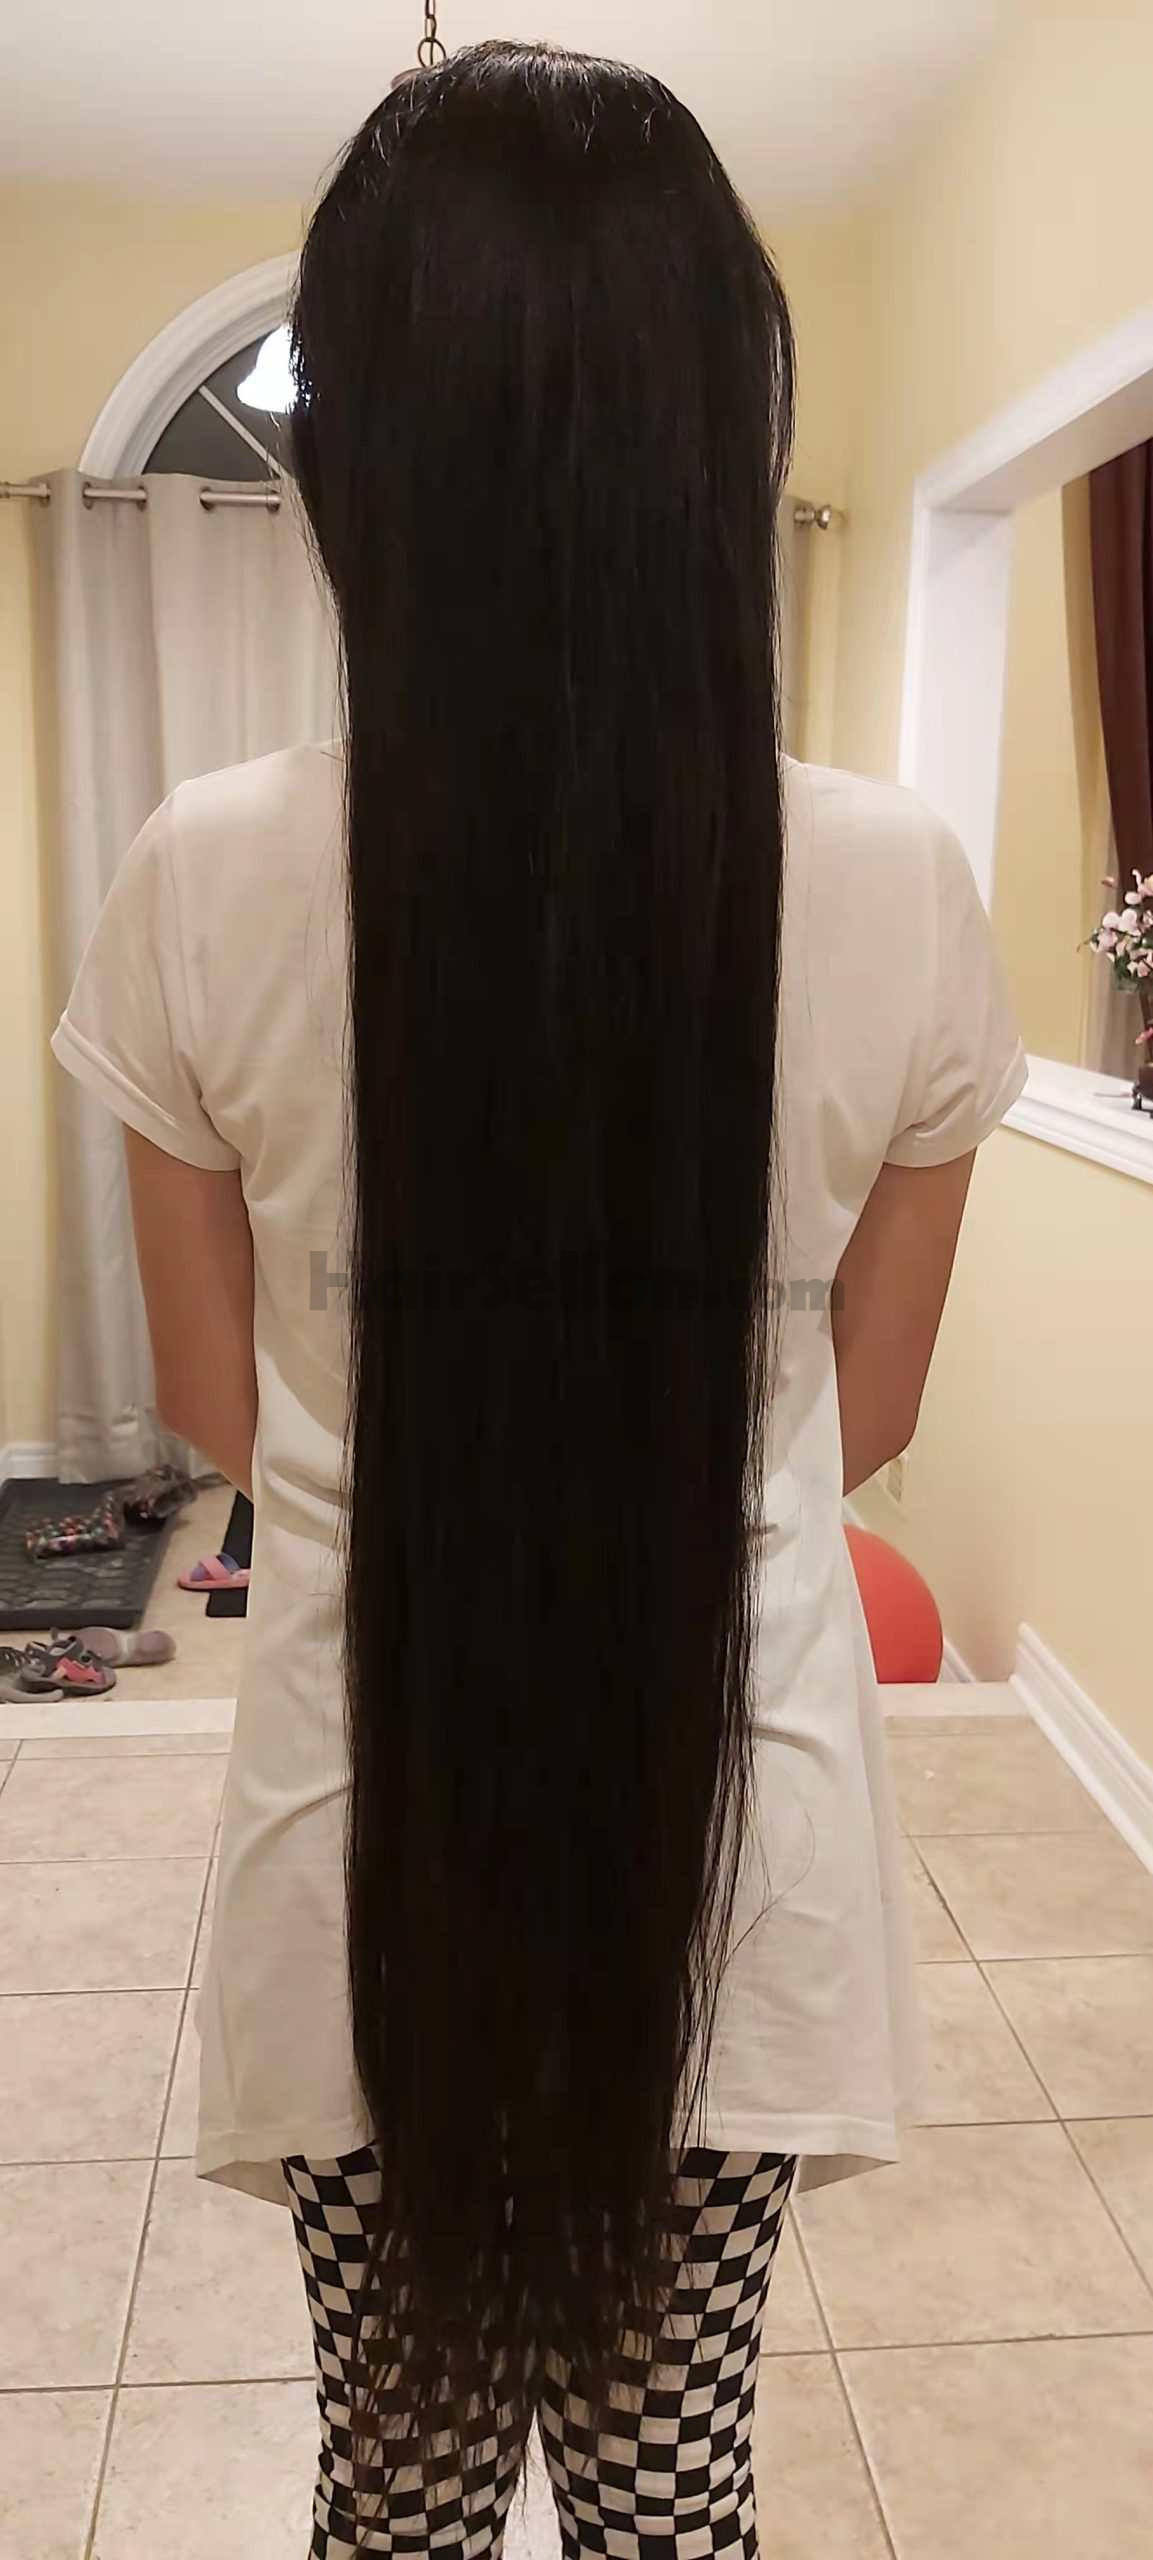 Straight black virgin hair 1